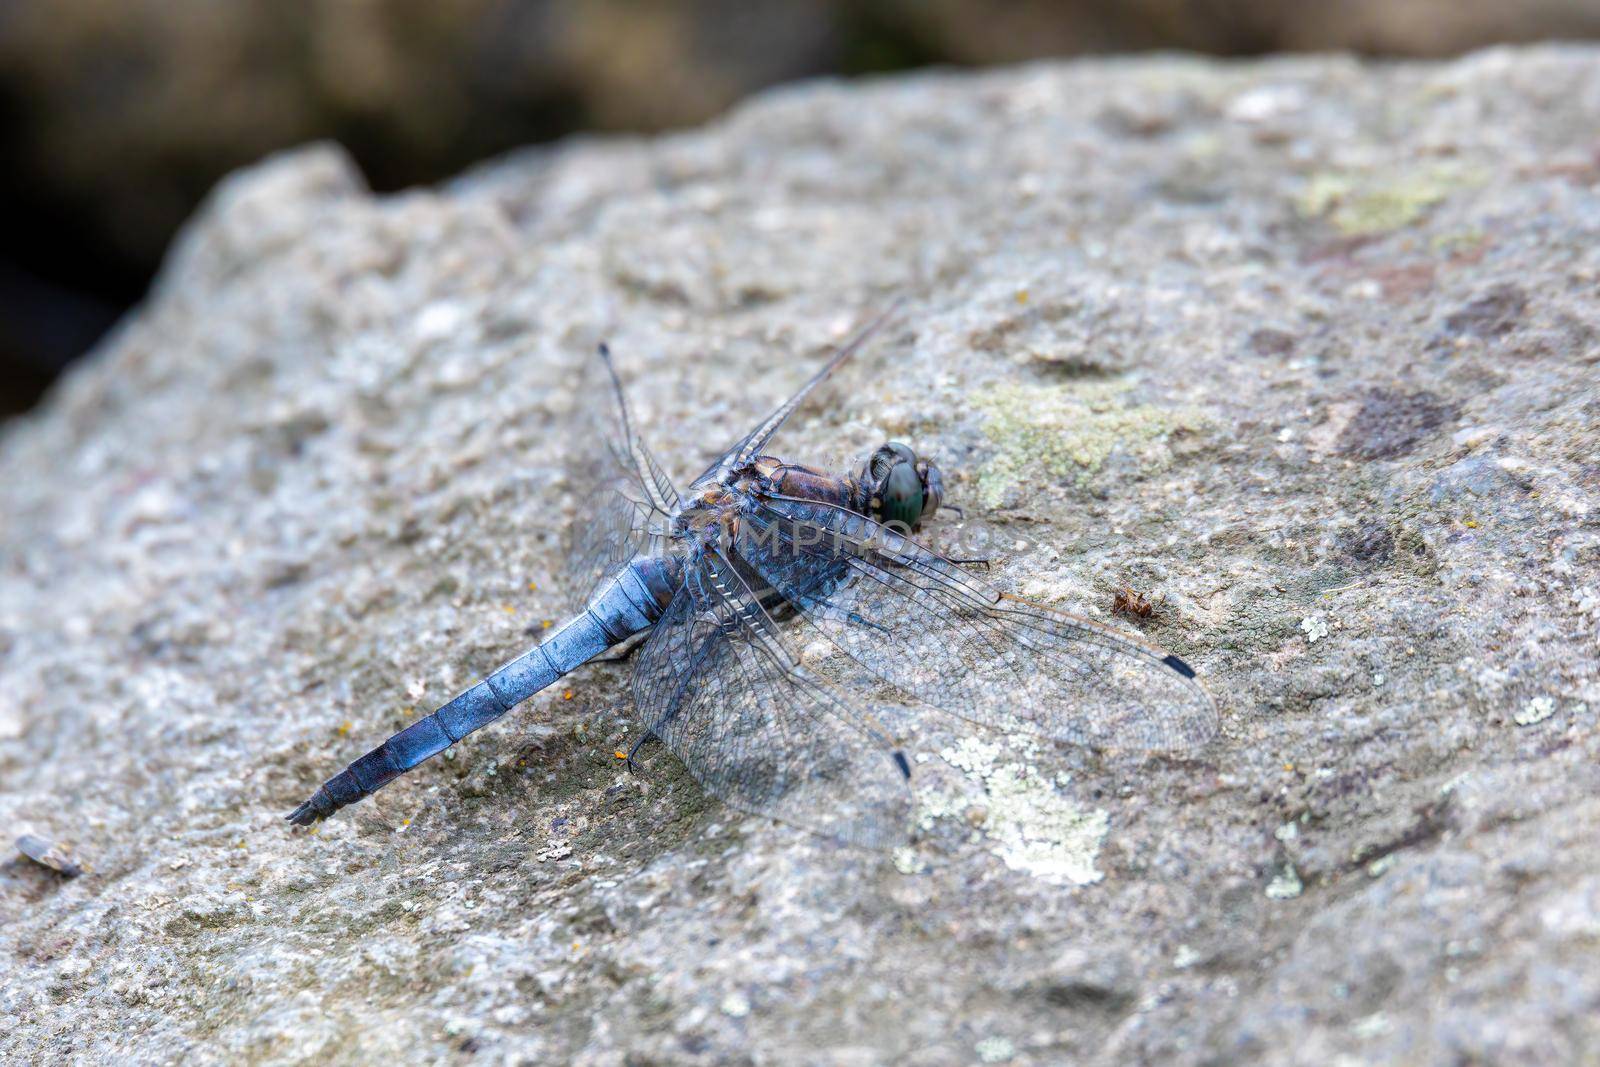 Southern skimmer dragonfly - Orthetrum brunneum sitting on stone, Czech Republic, Europe wildlife